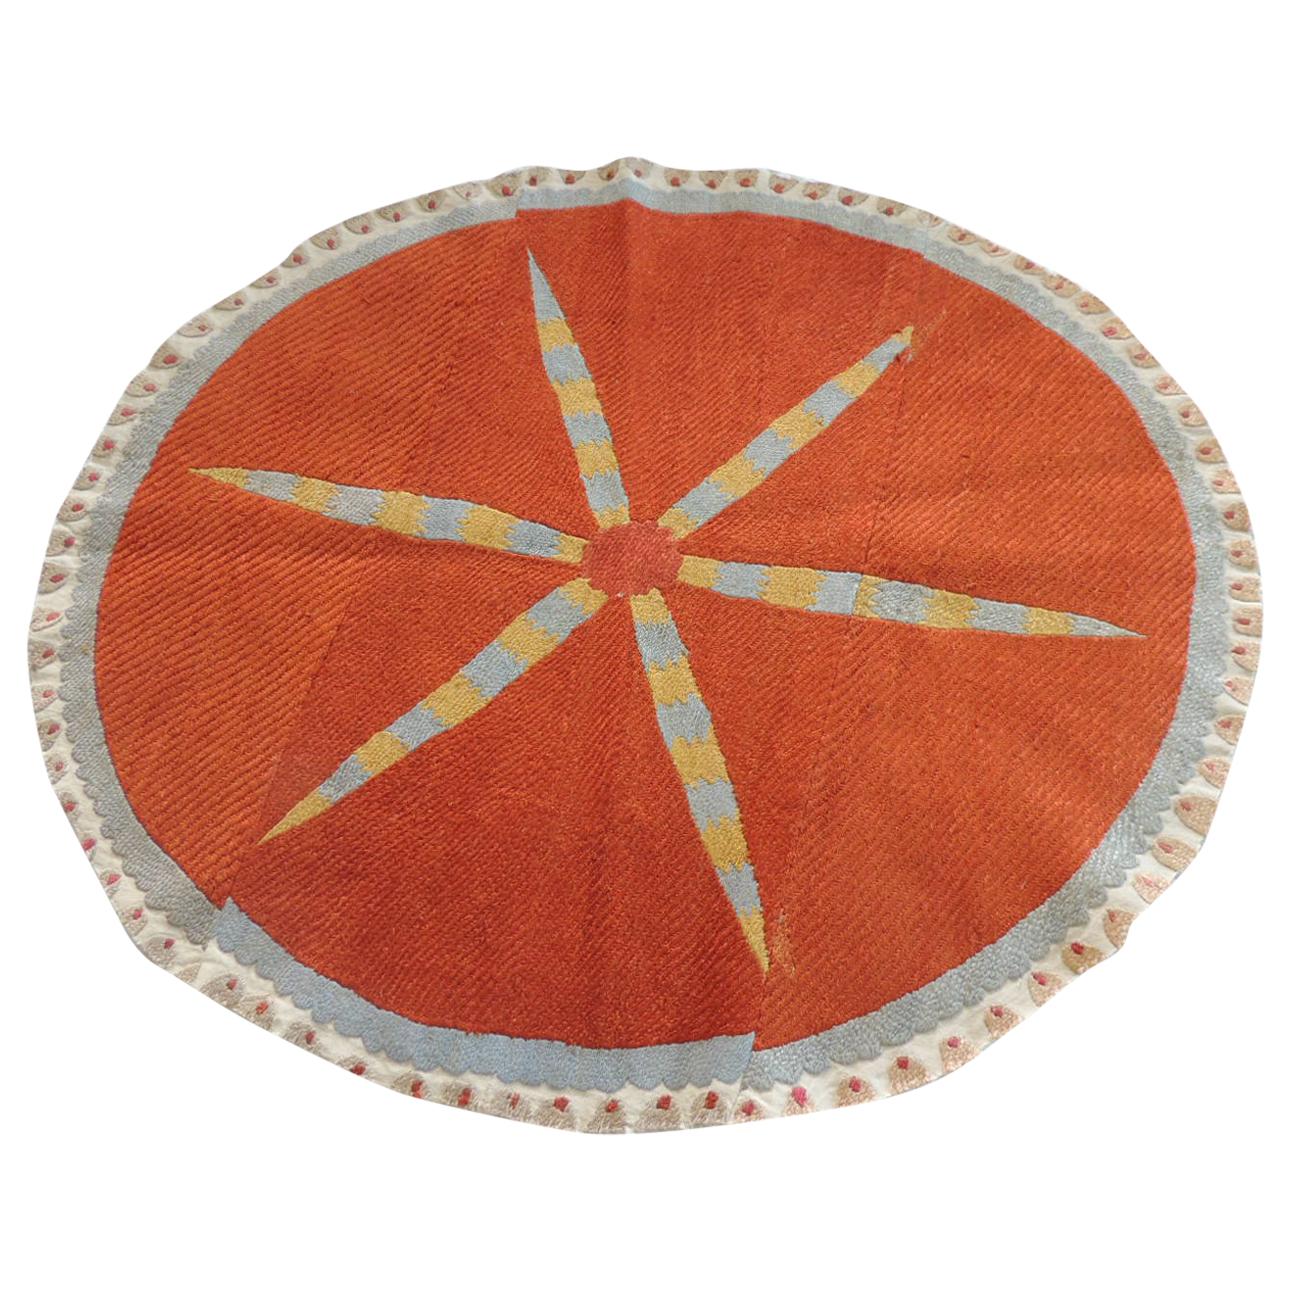 Vintage Orange and Yellow Oval Suzani Textile Fragment